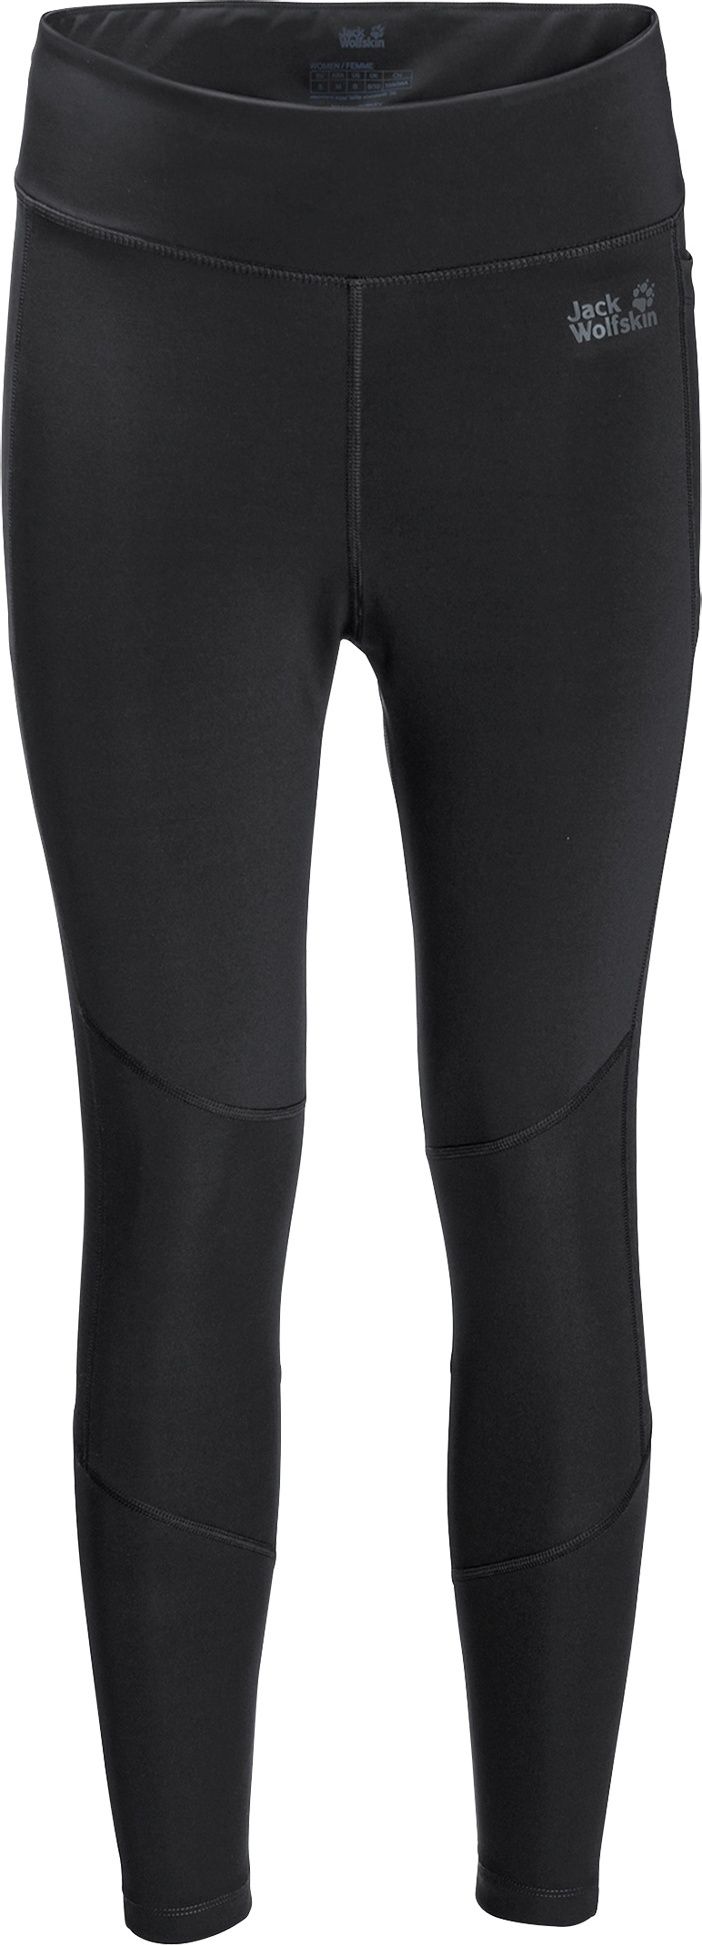 Women's Salmaser Pants Black | Buy Women's Salmaser Pants Black here |  Outnorth